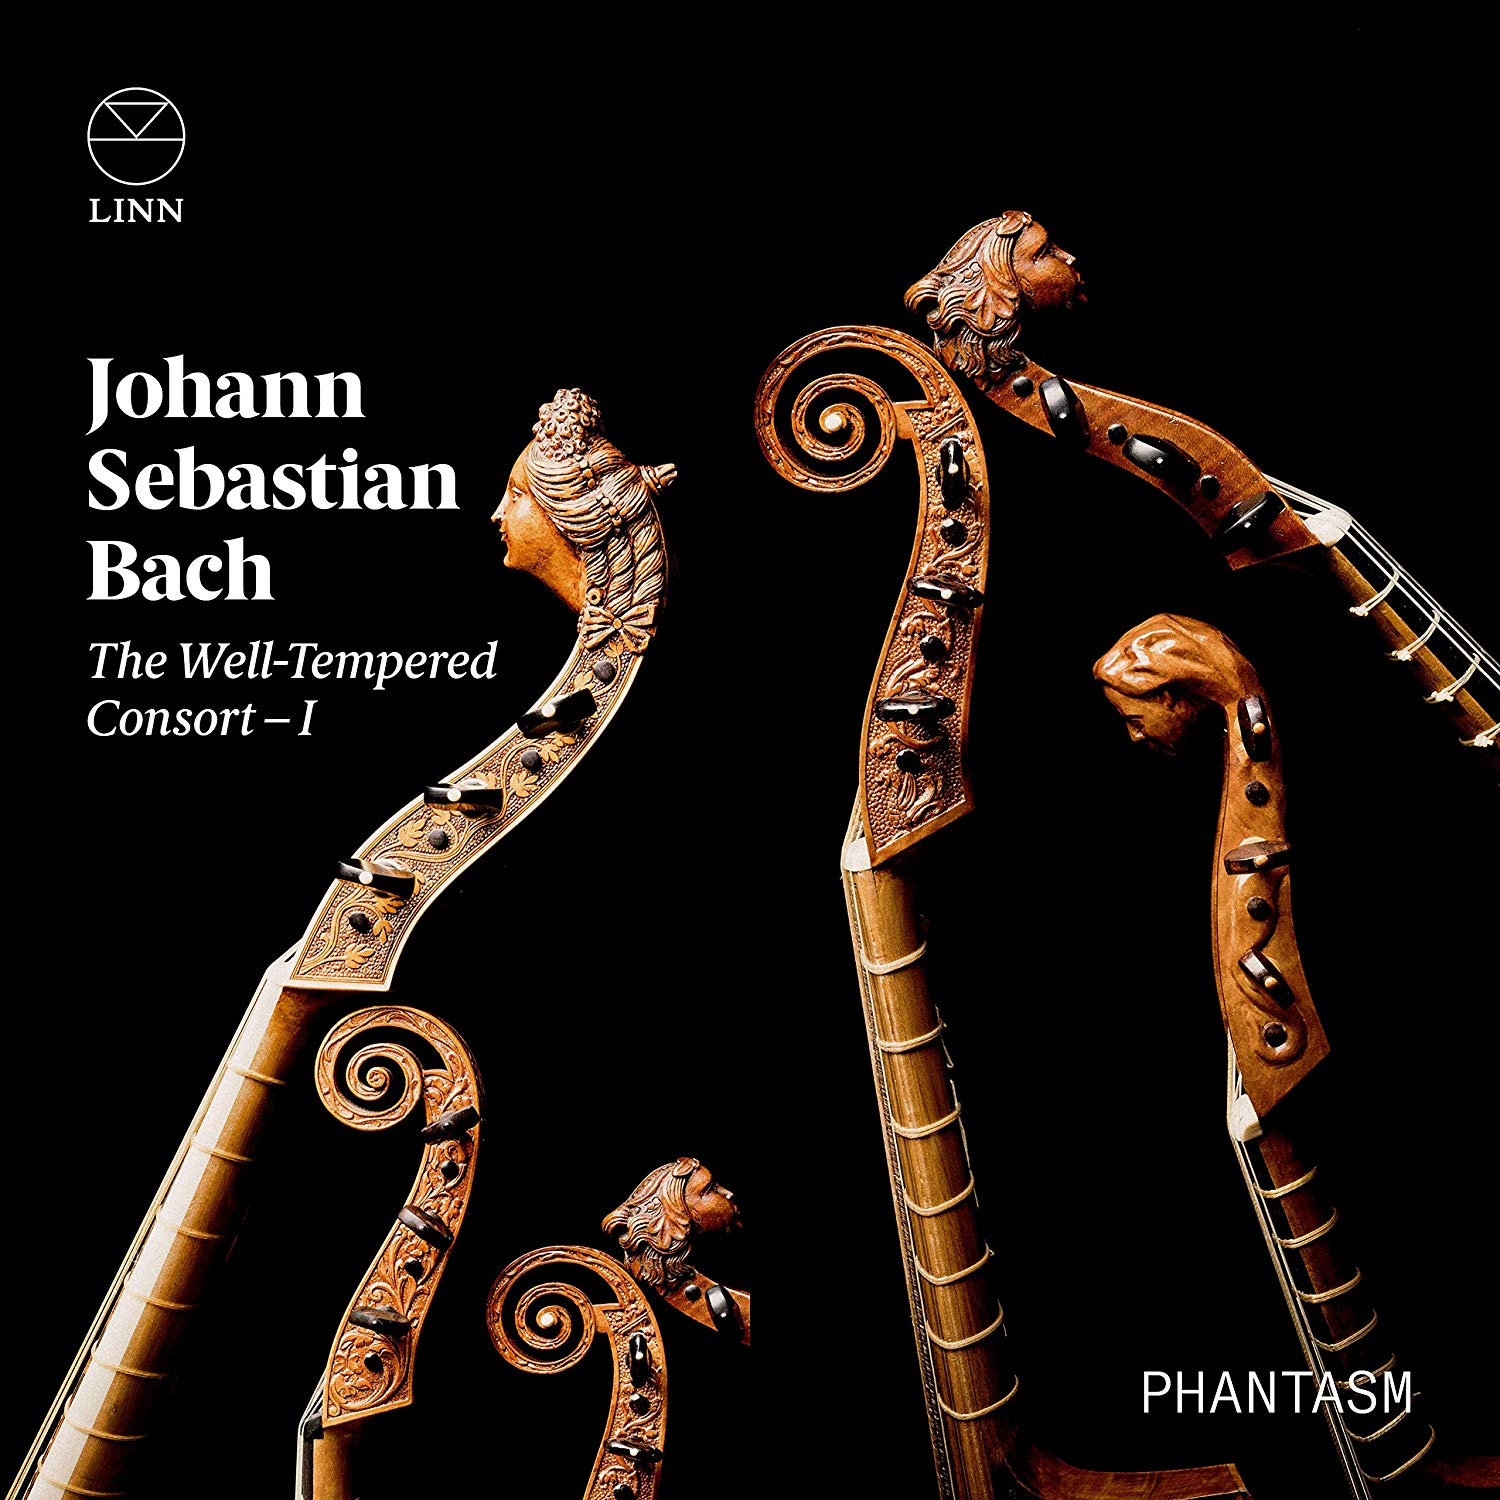 Cover of Phantasm CD of Bach transcriptions